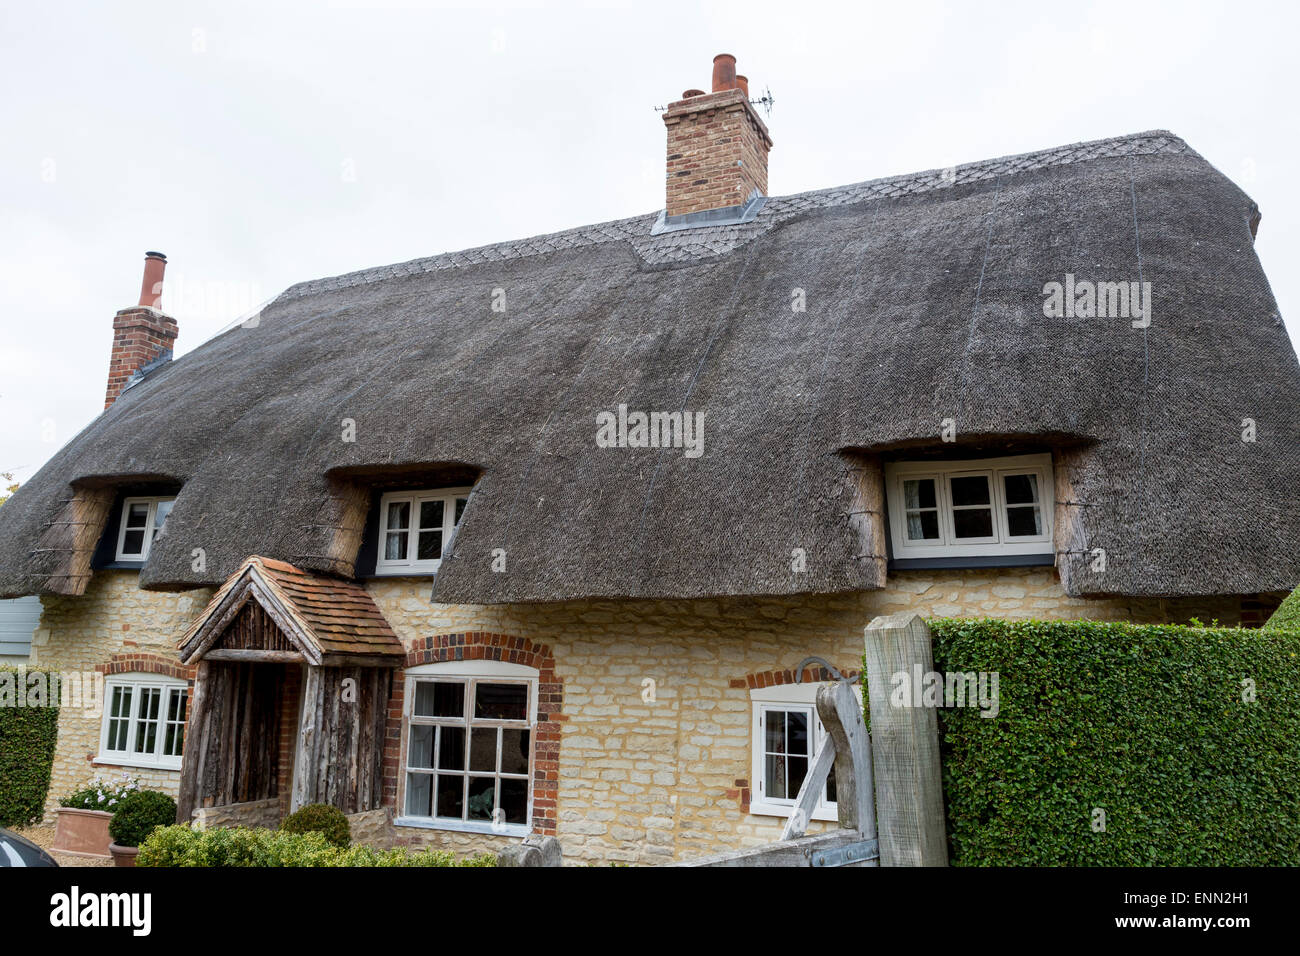 UK, England, Ewelme.  Thatched Roof on an English Cottage. Stock Photo